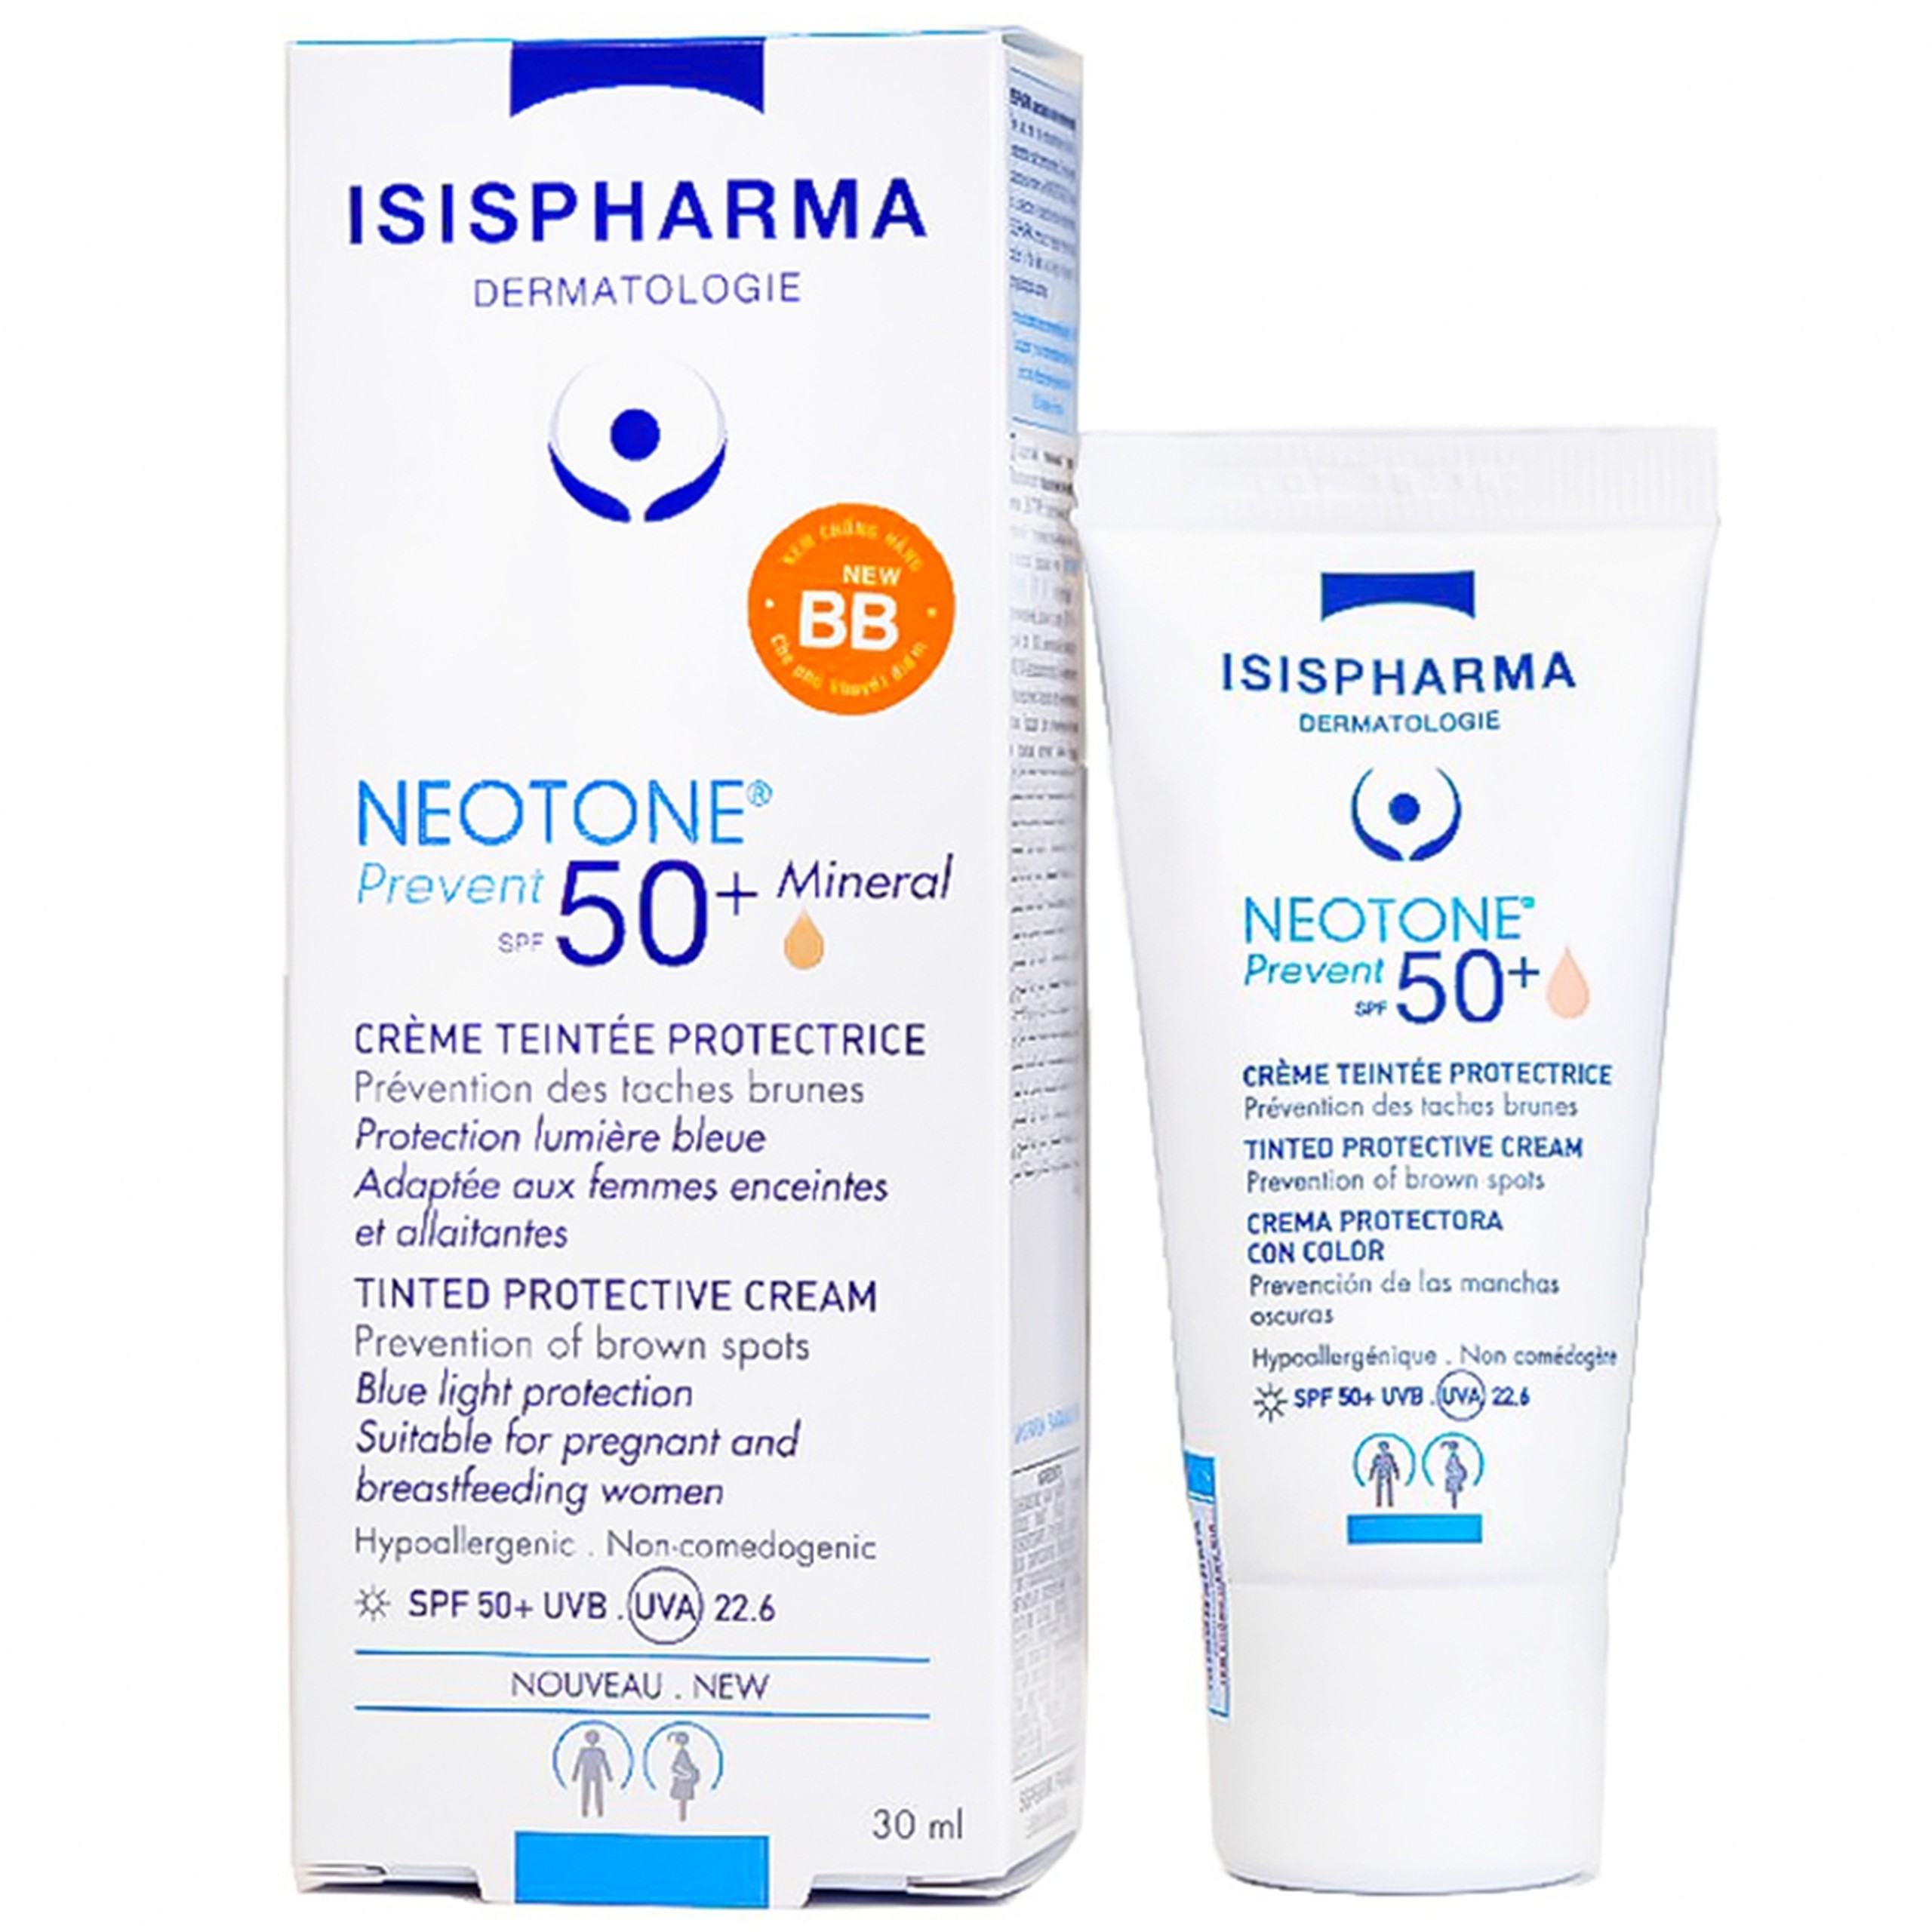 Kem chống nắng Isis Pharma Neotone Prevent SPF50+ giảm sạm da, ngăn ngừa nám, lão hóa (30ml)